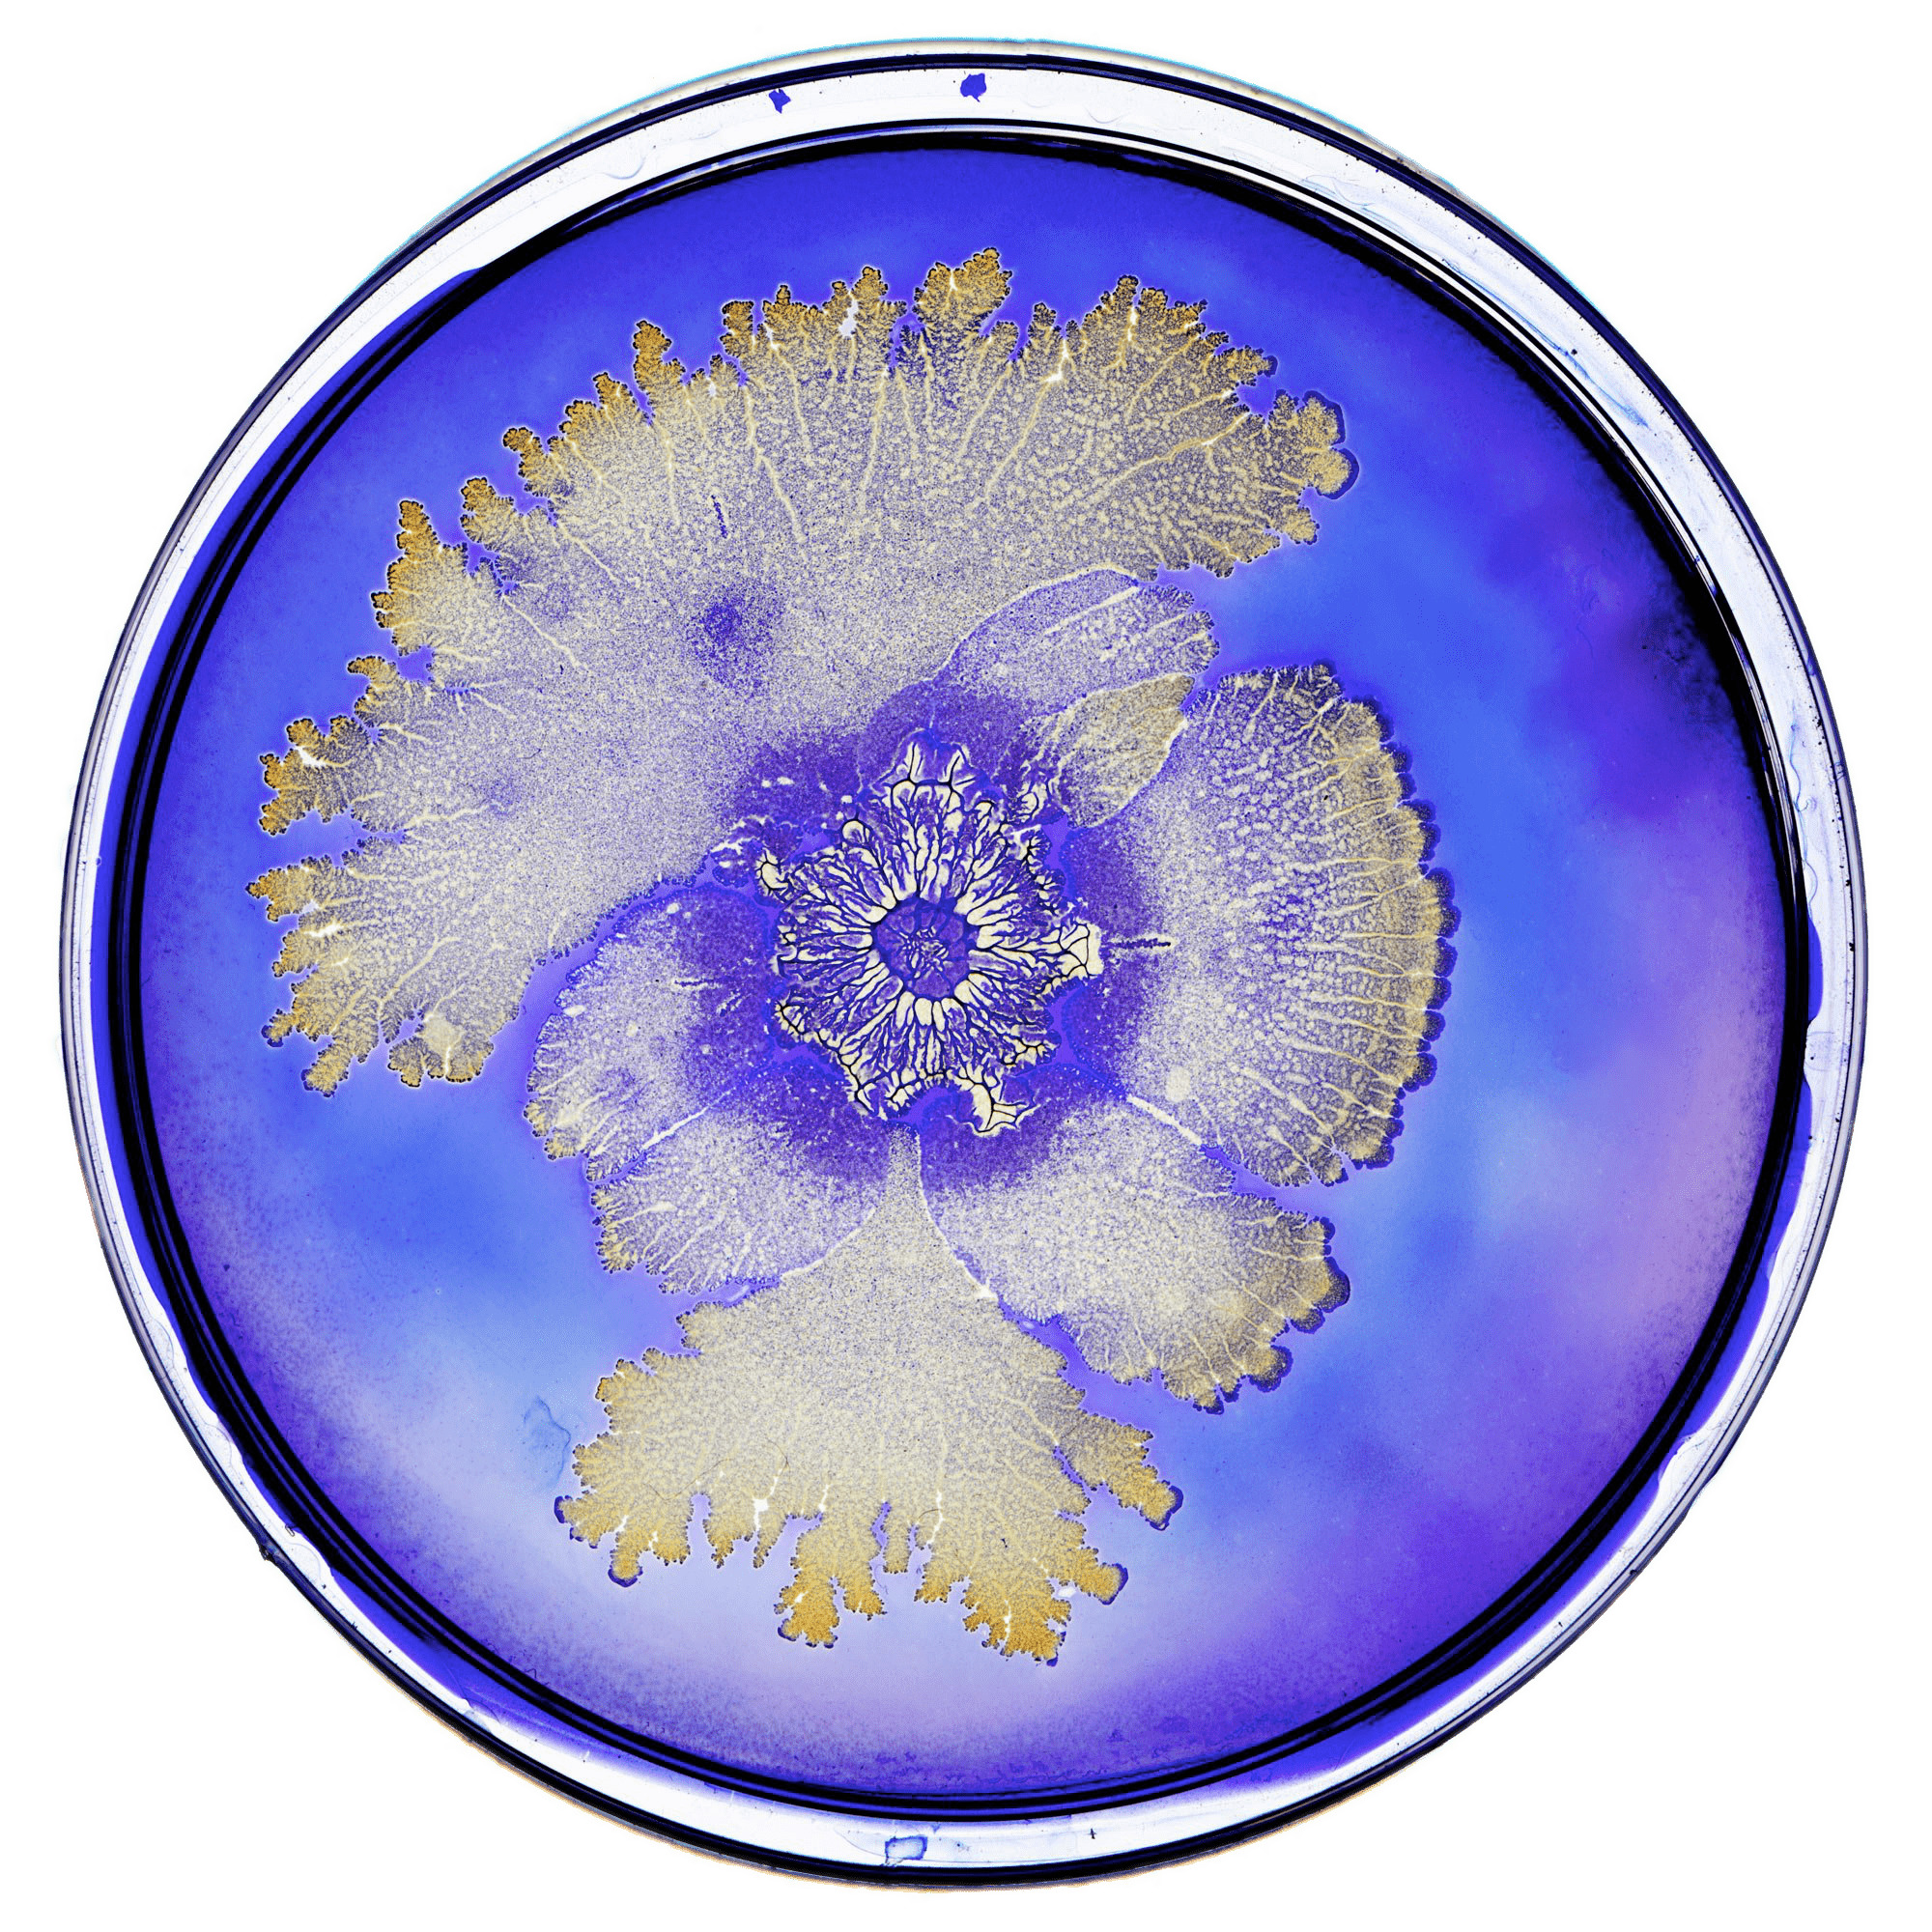 Bacteria In Petri Dish icons